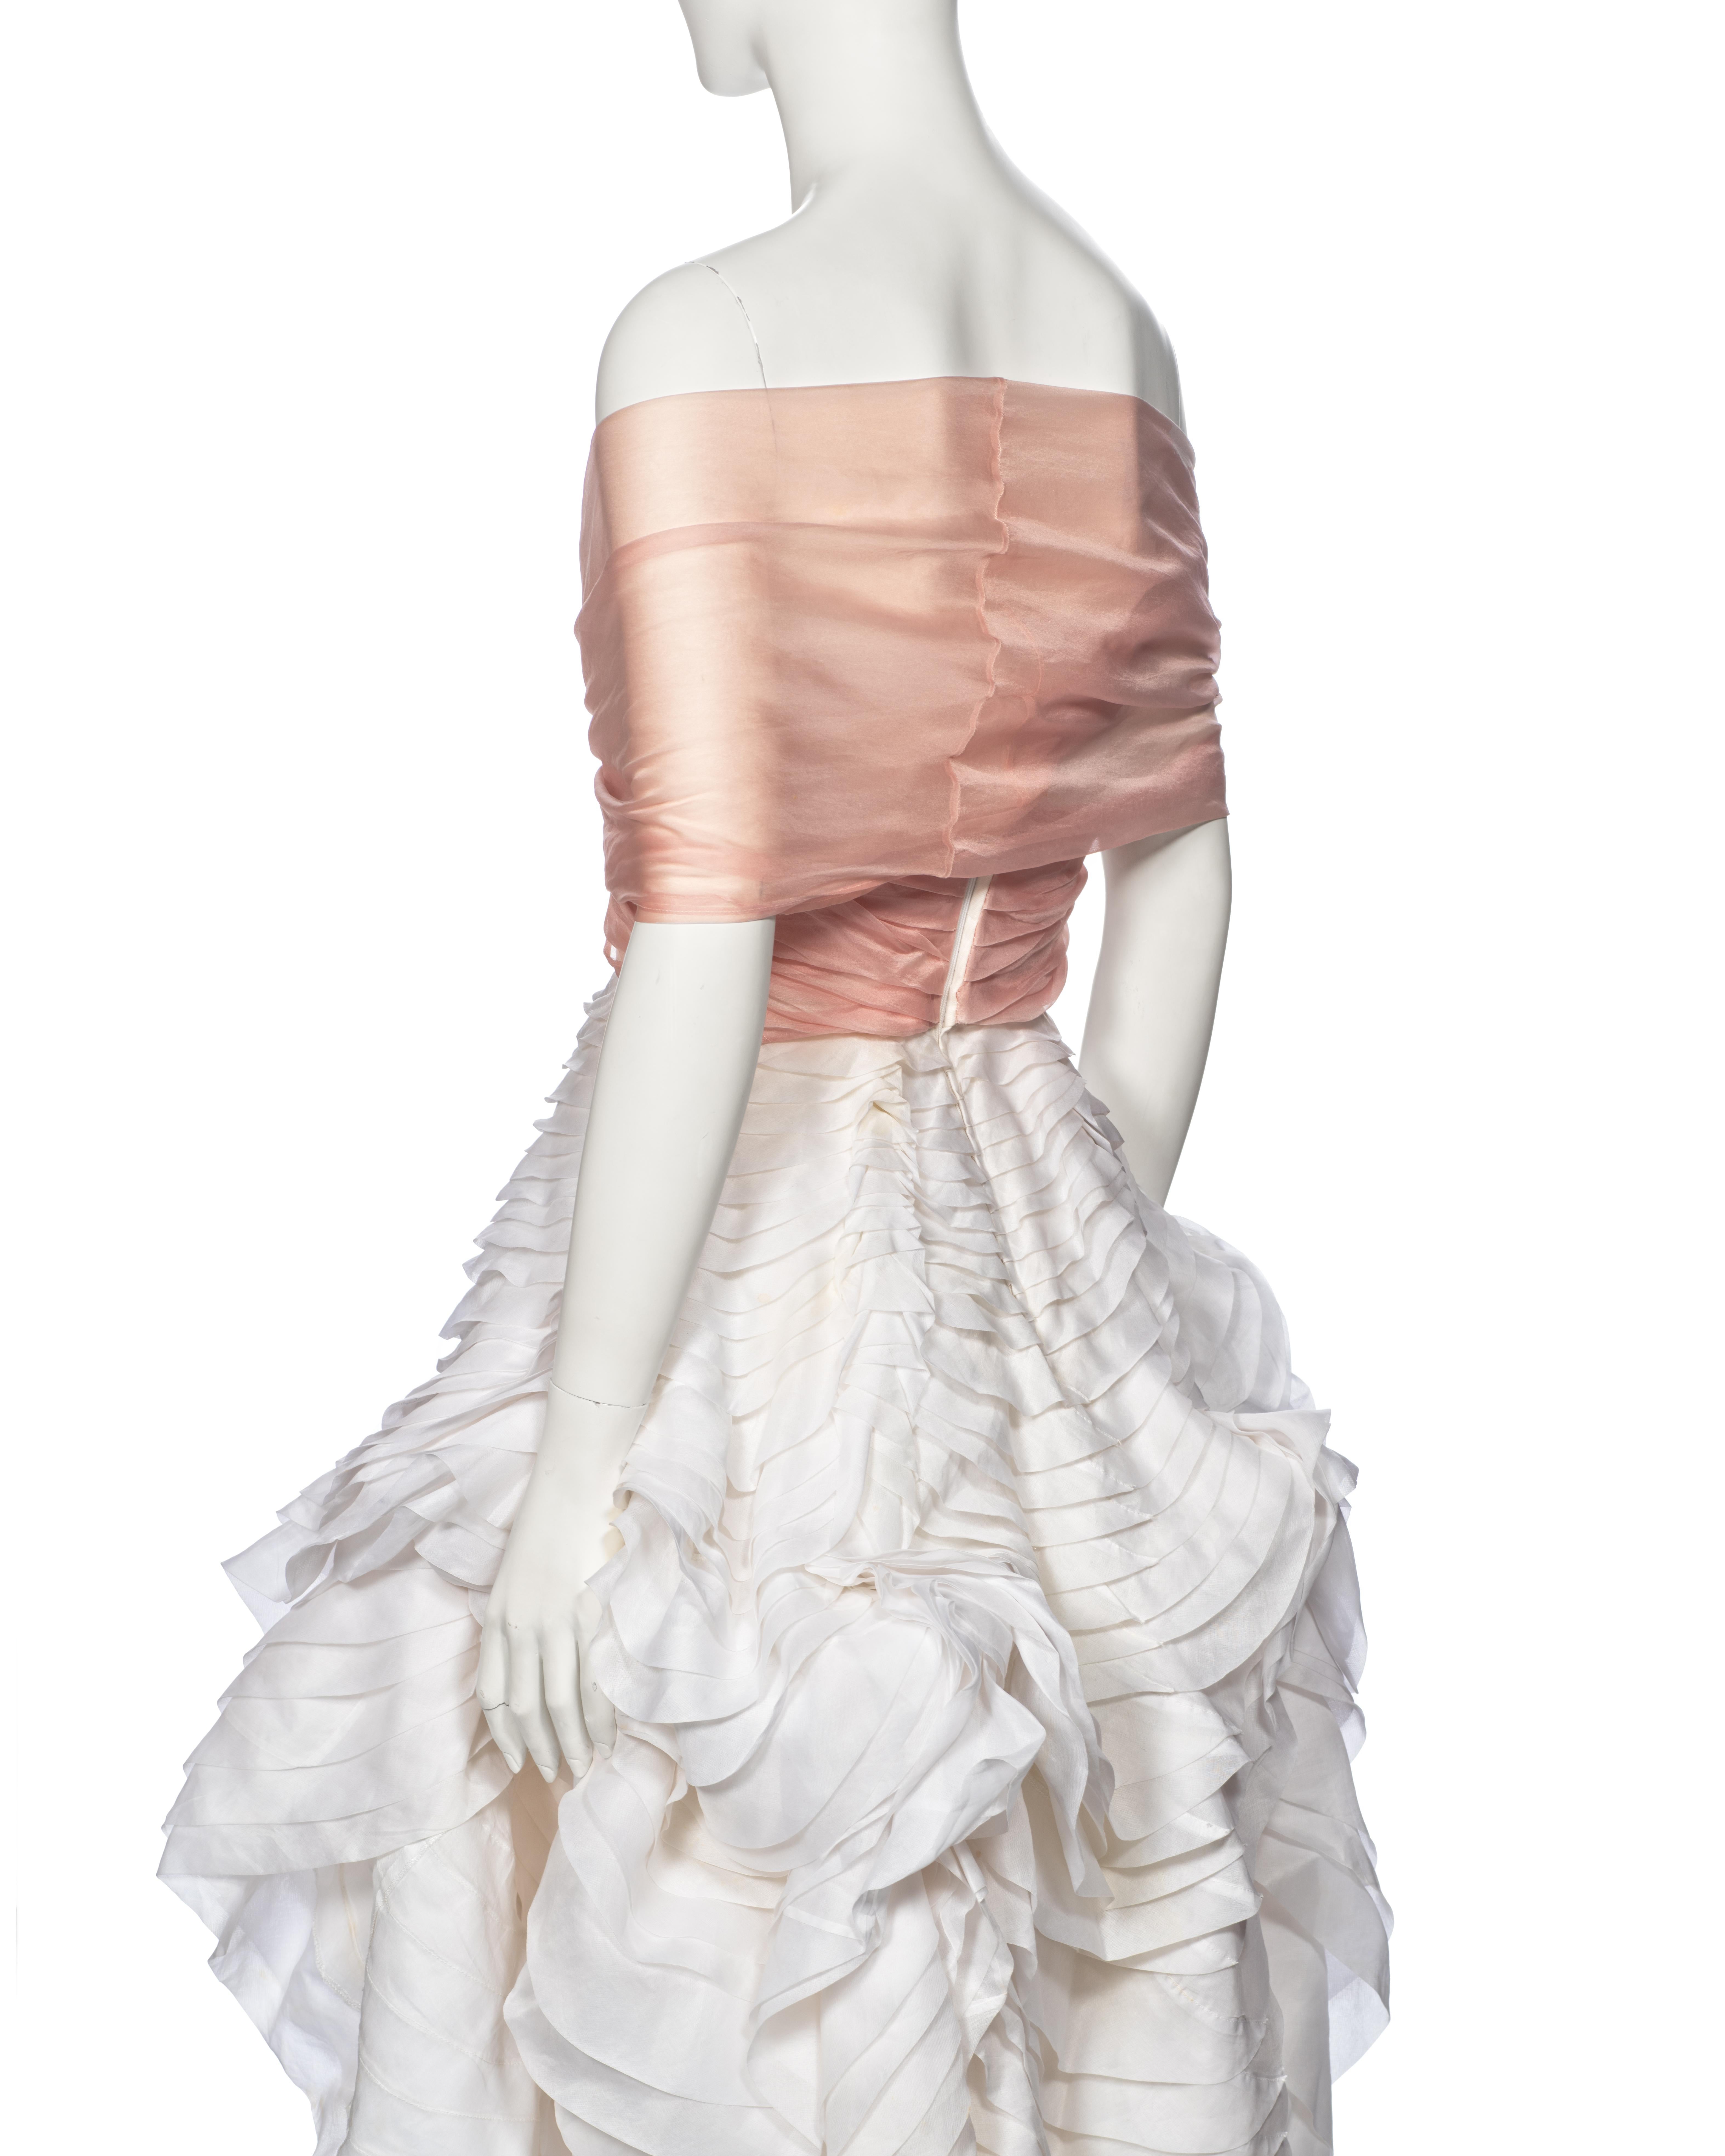 John Galliano Blanche DuBois Clam Dress, ss 1988 For Sale 3